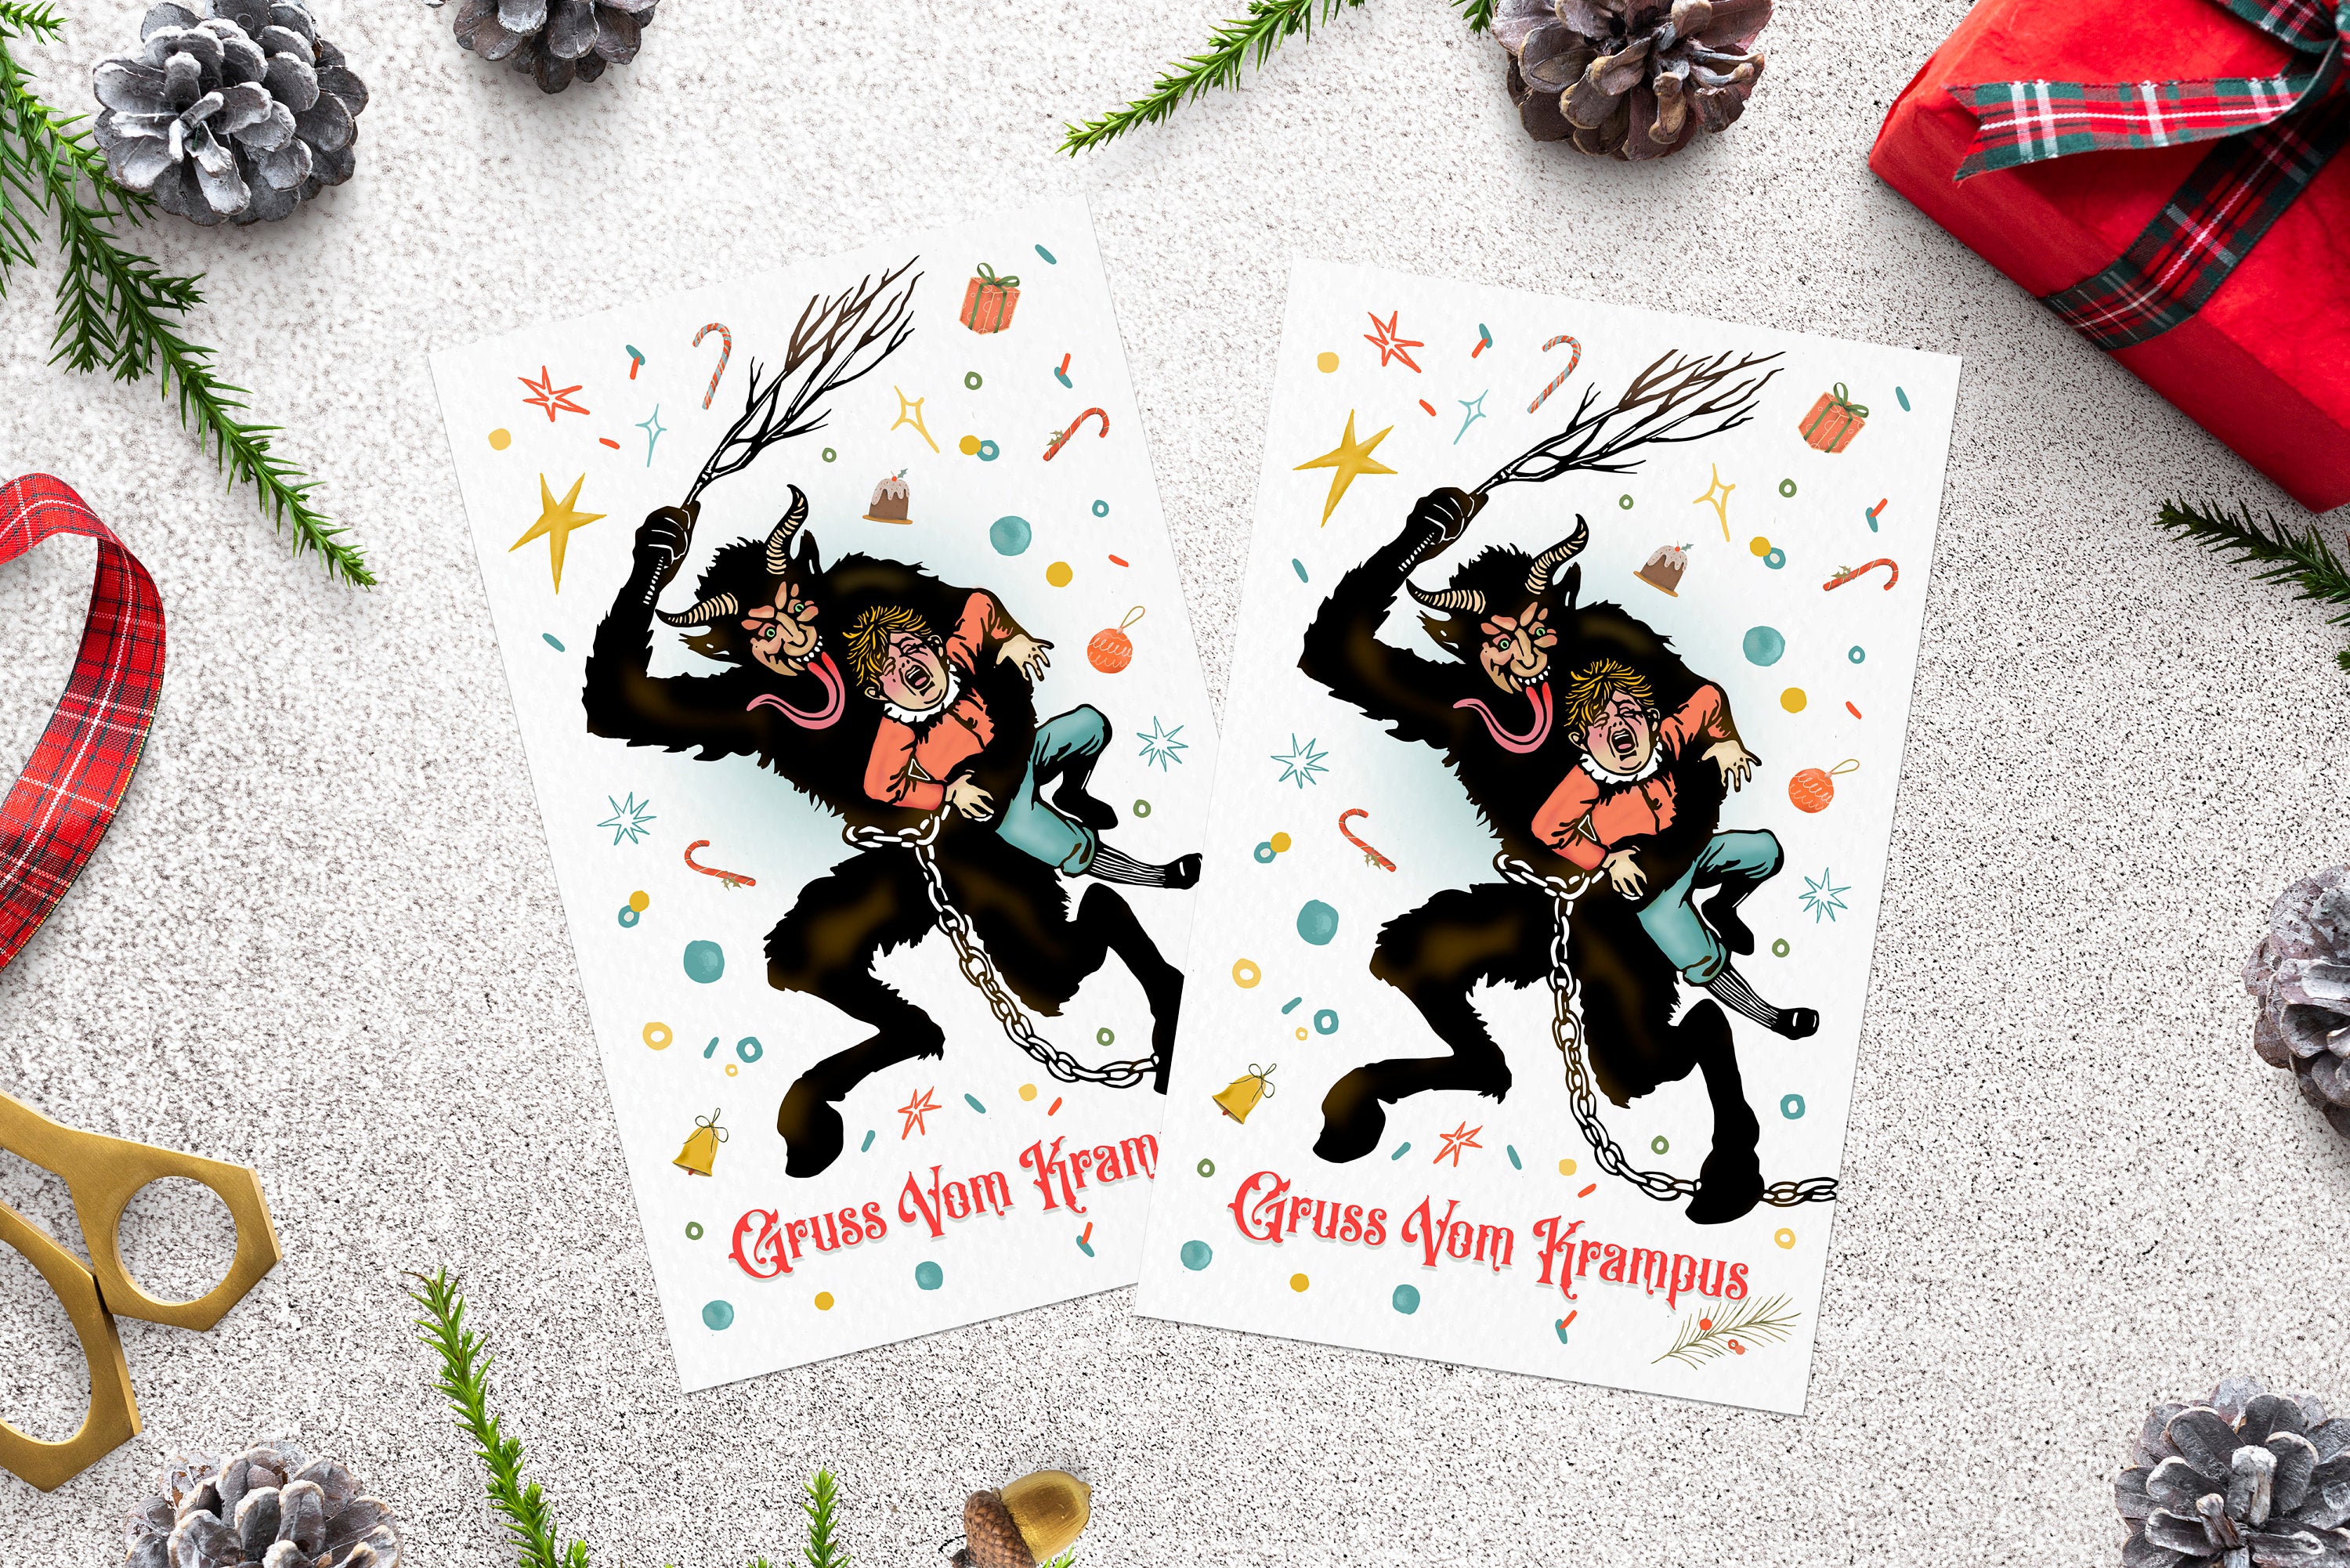 Season's Beatings, Gruss Vom Krampus Christmas Postcard Set, 4 Designs, Set of 12